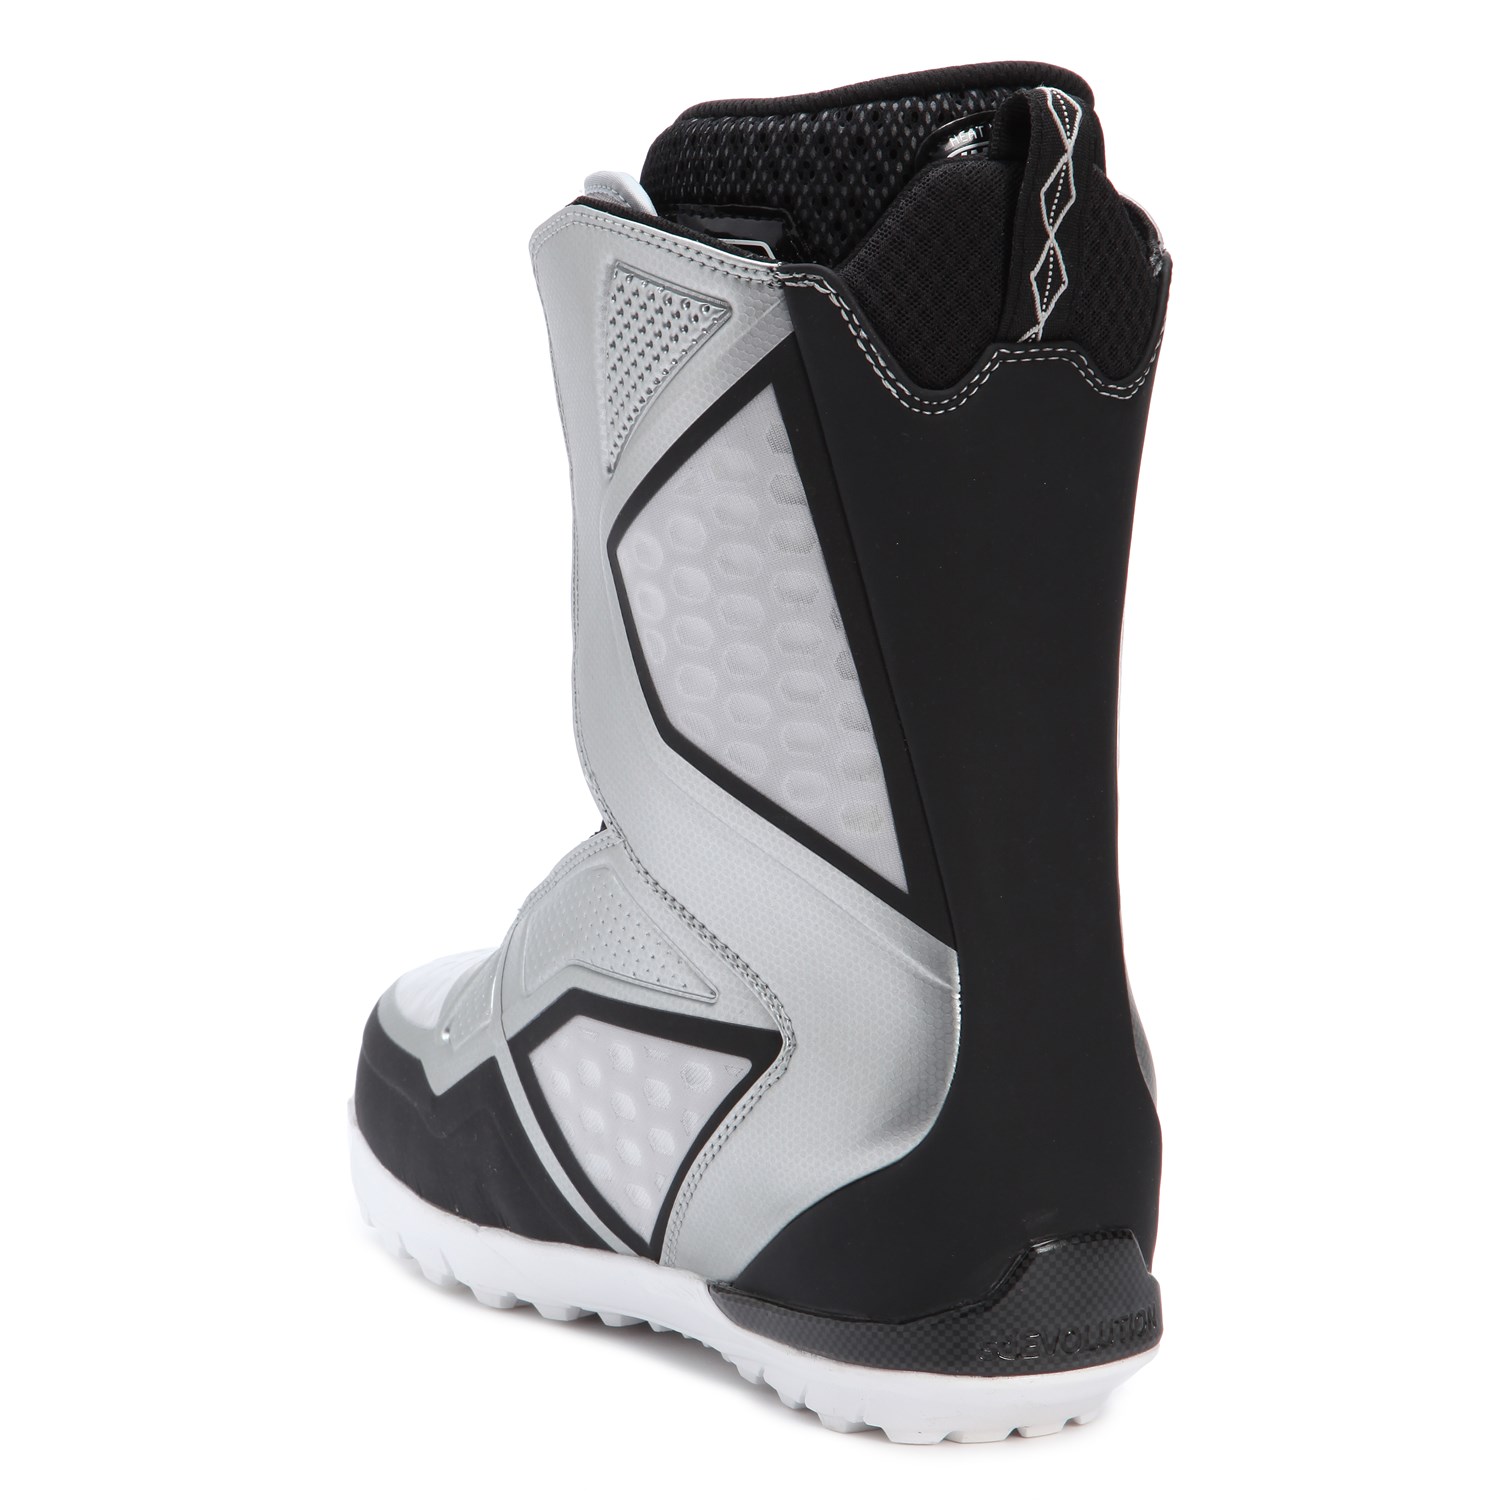 Airing rice Intermediate 32 Ultralight 2 Snowboard Boots 2015 | evo